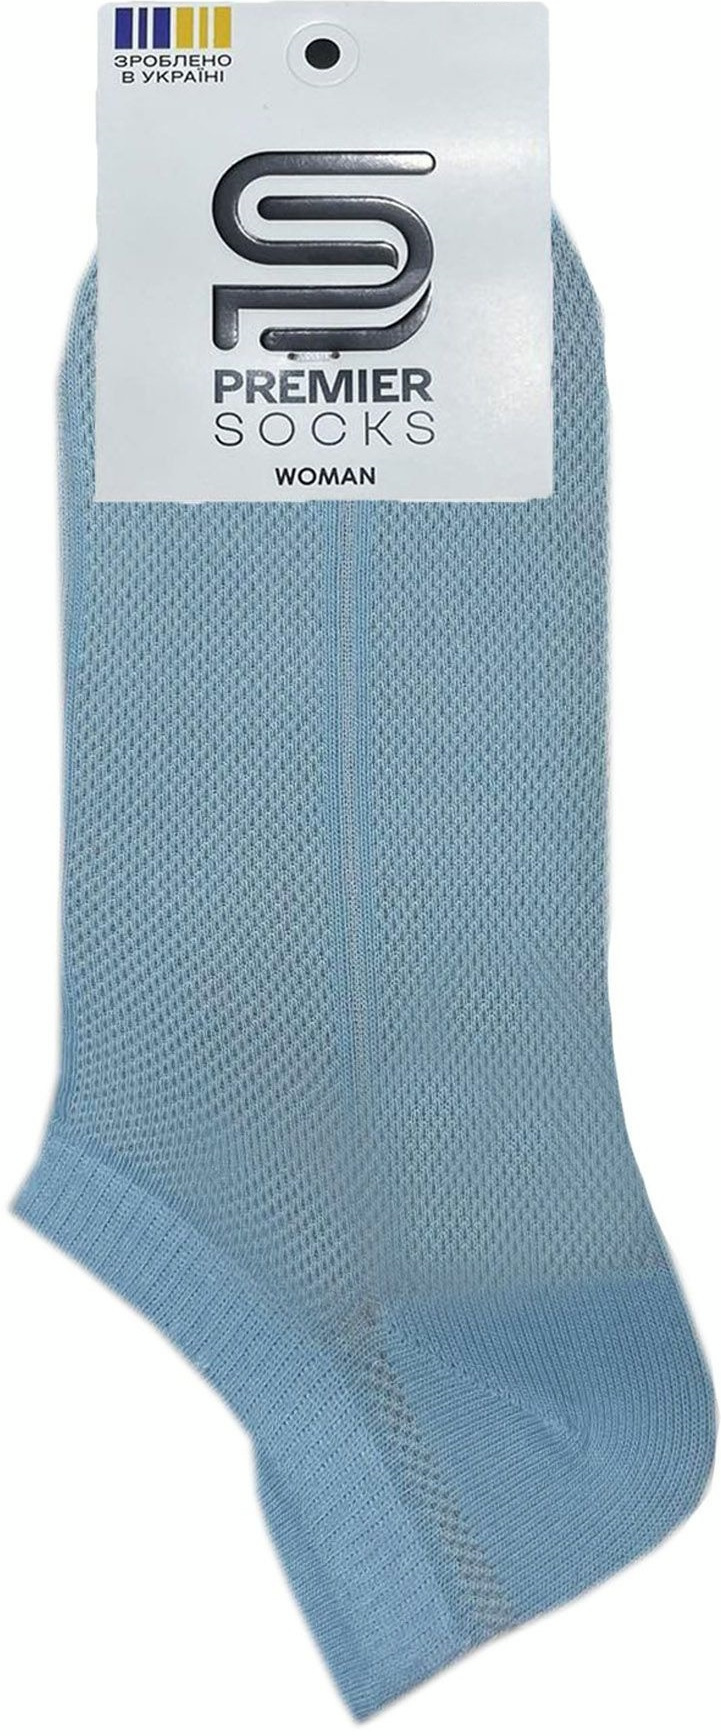 Носки женские Premier Socks 36-40 1 пара голубые (4820163318769) фото 2